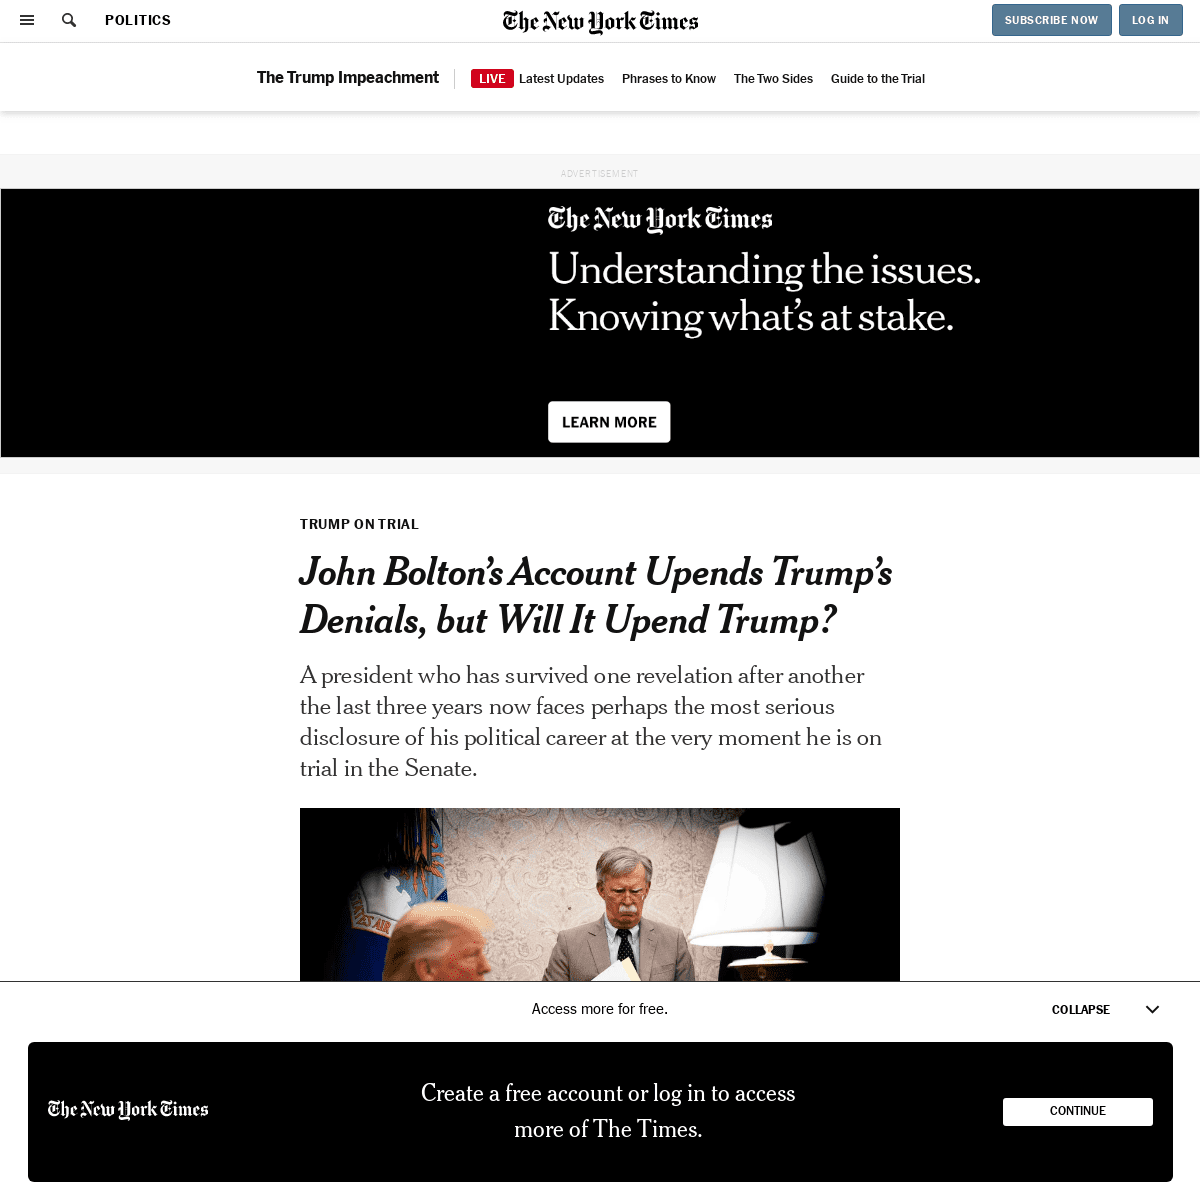 A complete backup of www.nytimes.com/2020/01/27/us/politics/john-bolton-trump.html